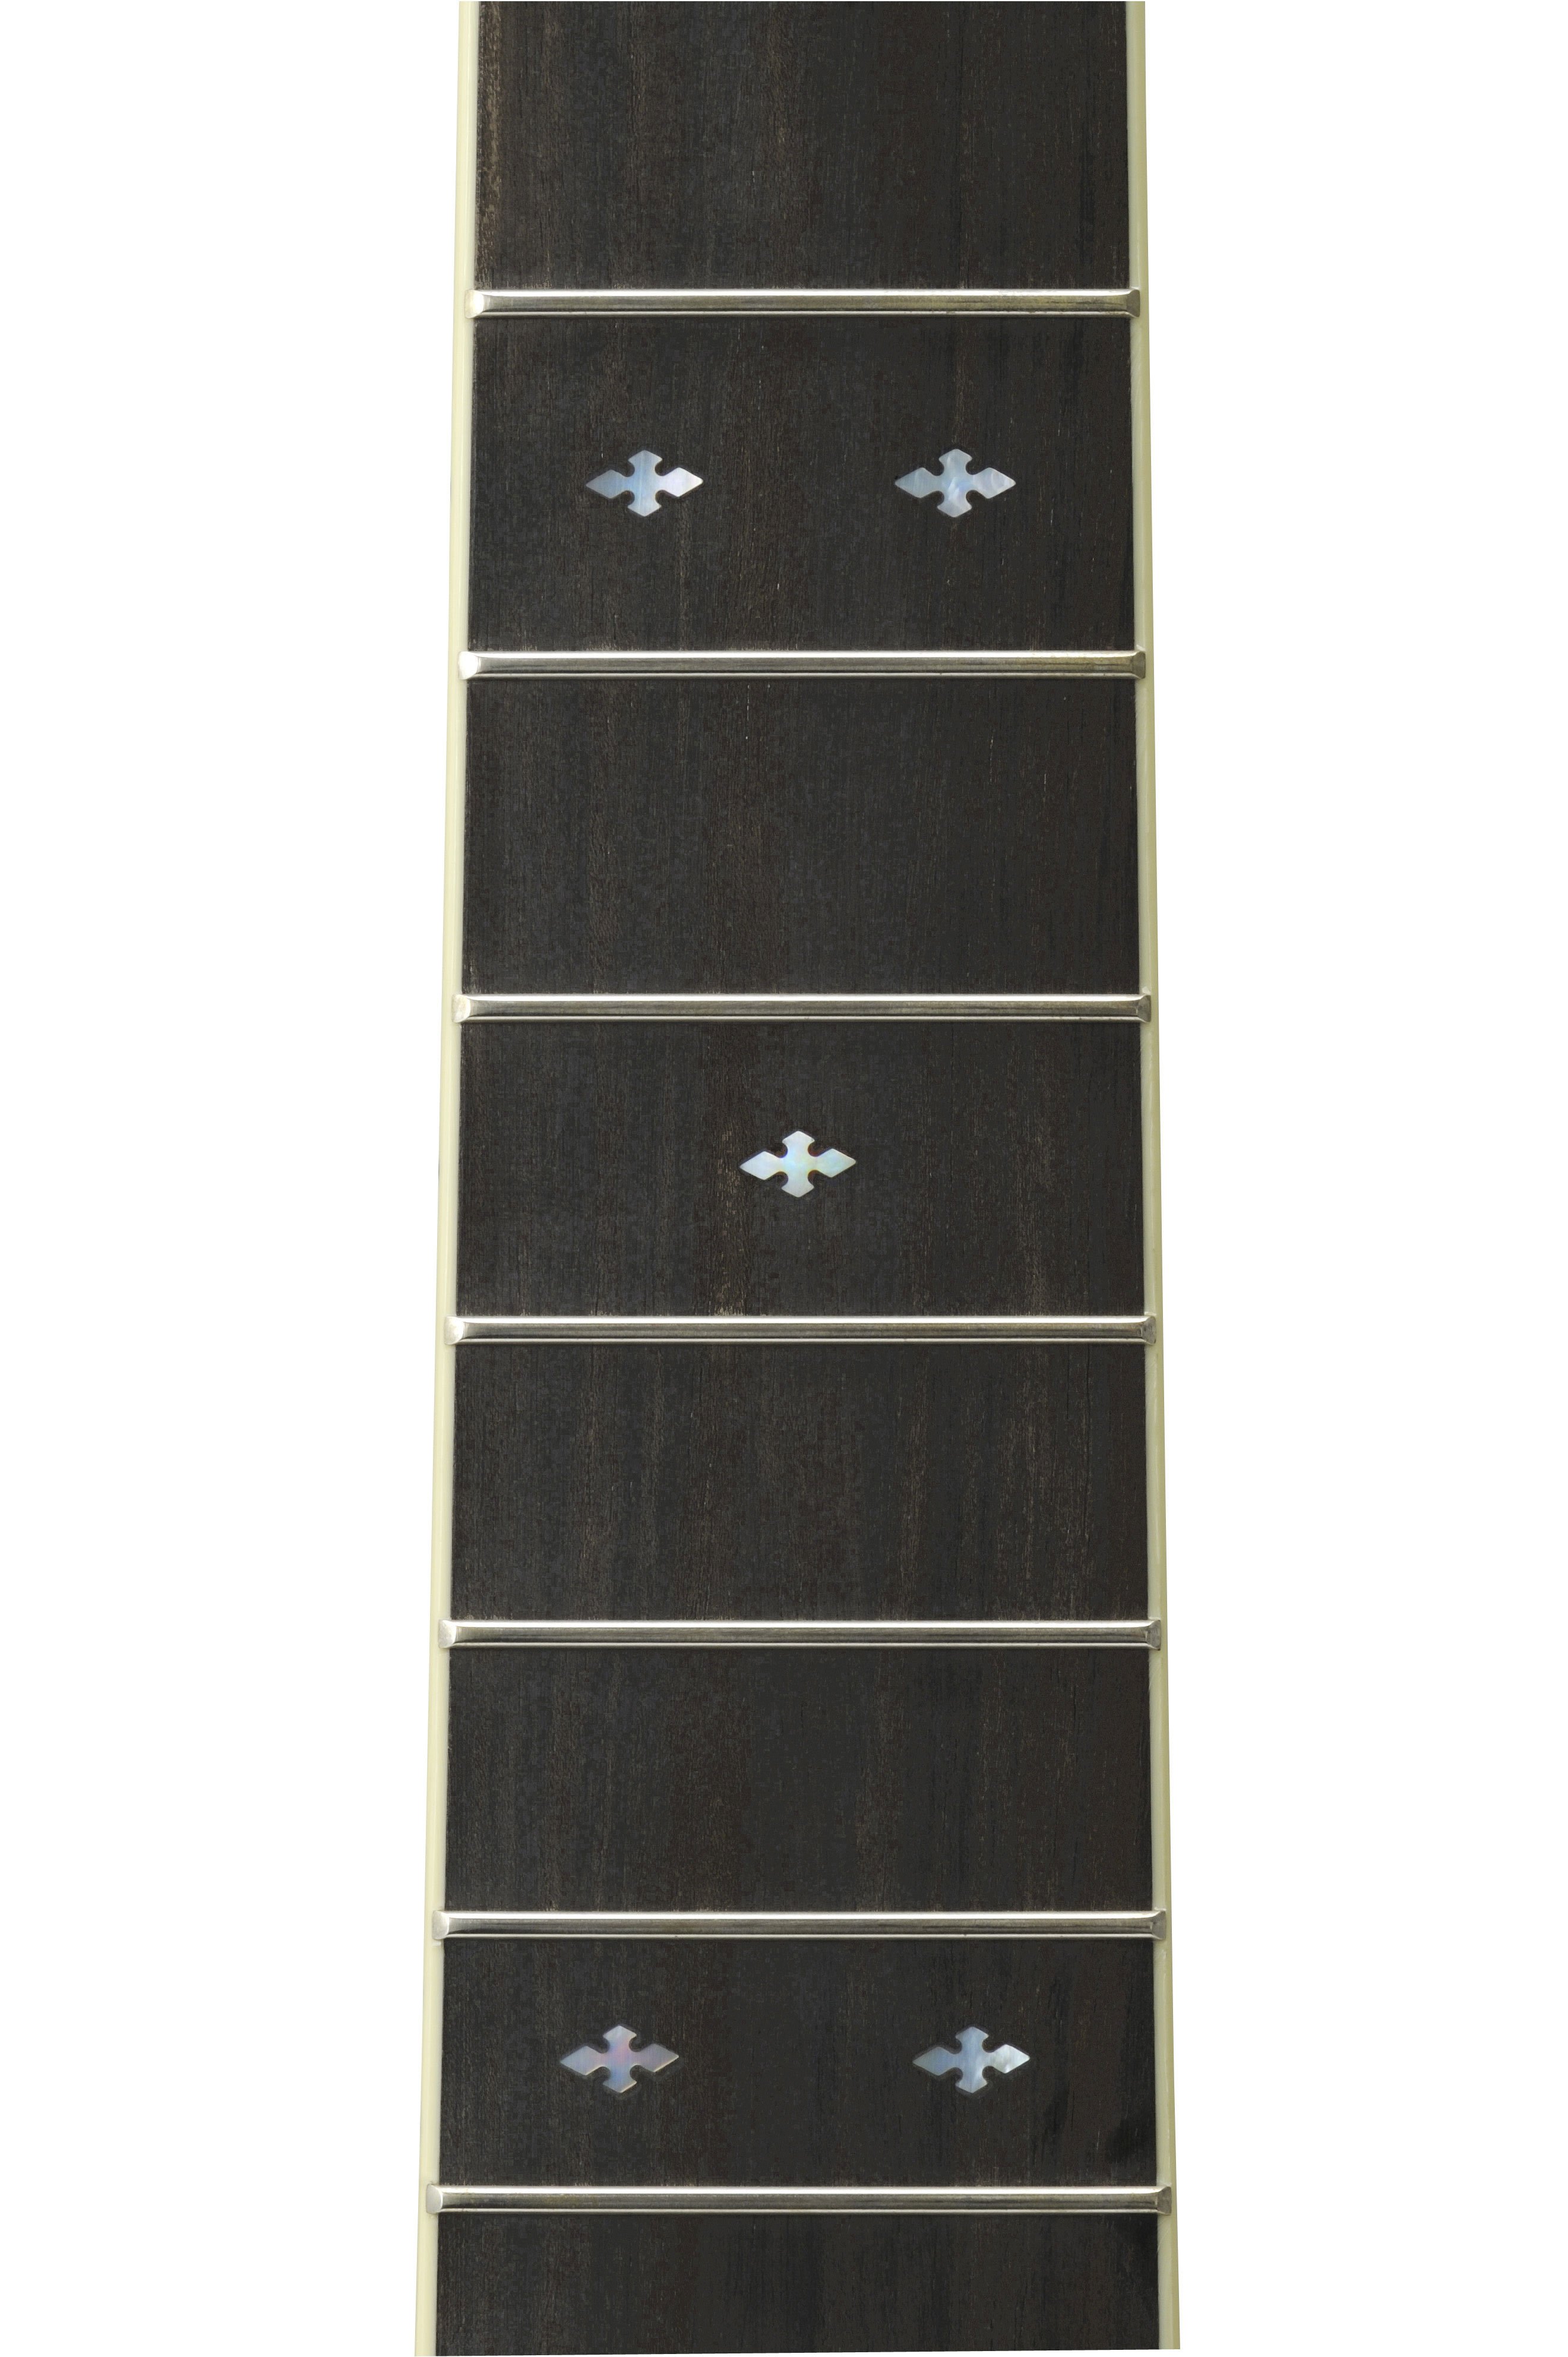 L Series - LL Series - Acoustic Guitars - Guitars, Basses & Amps 